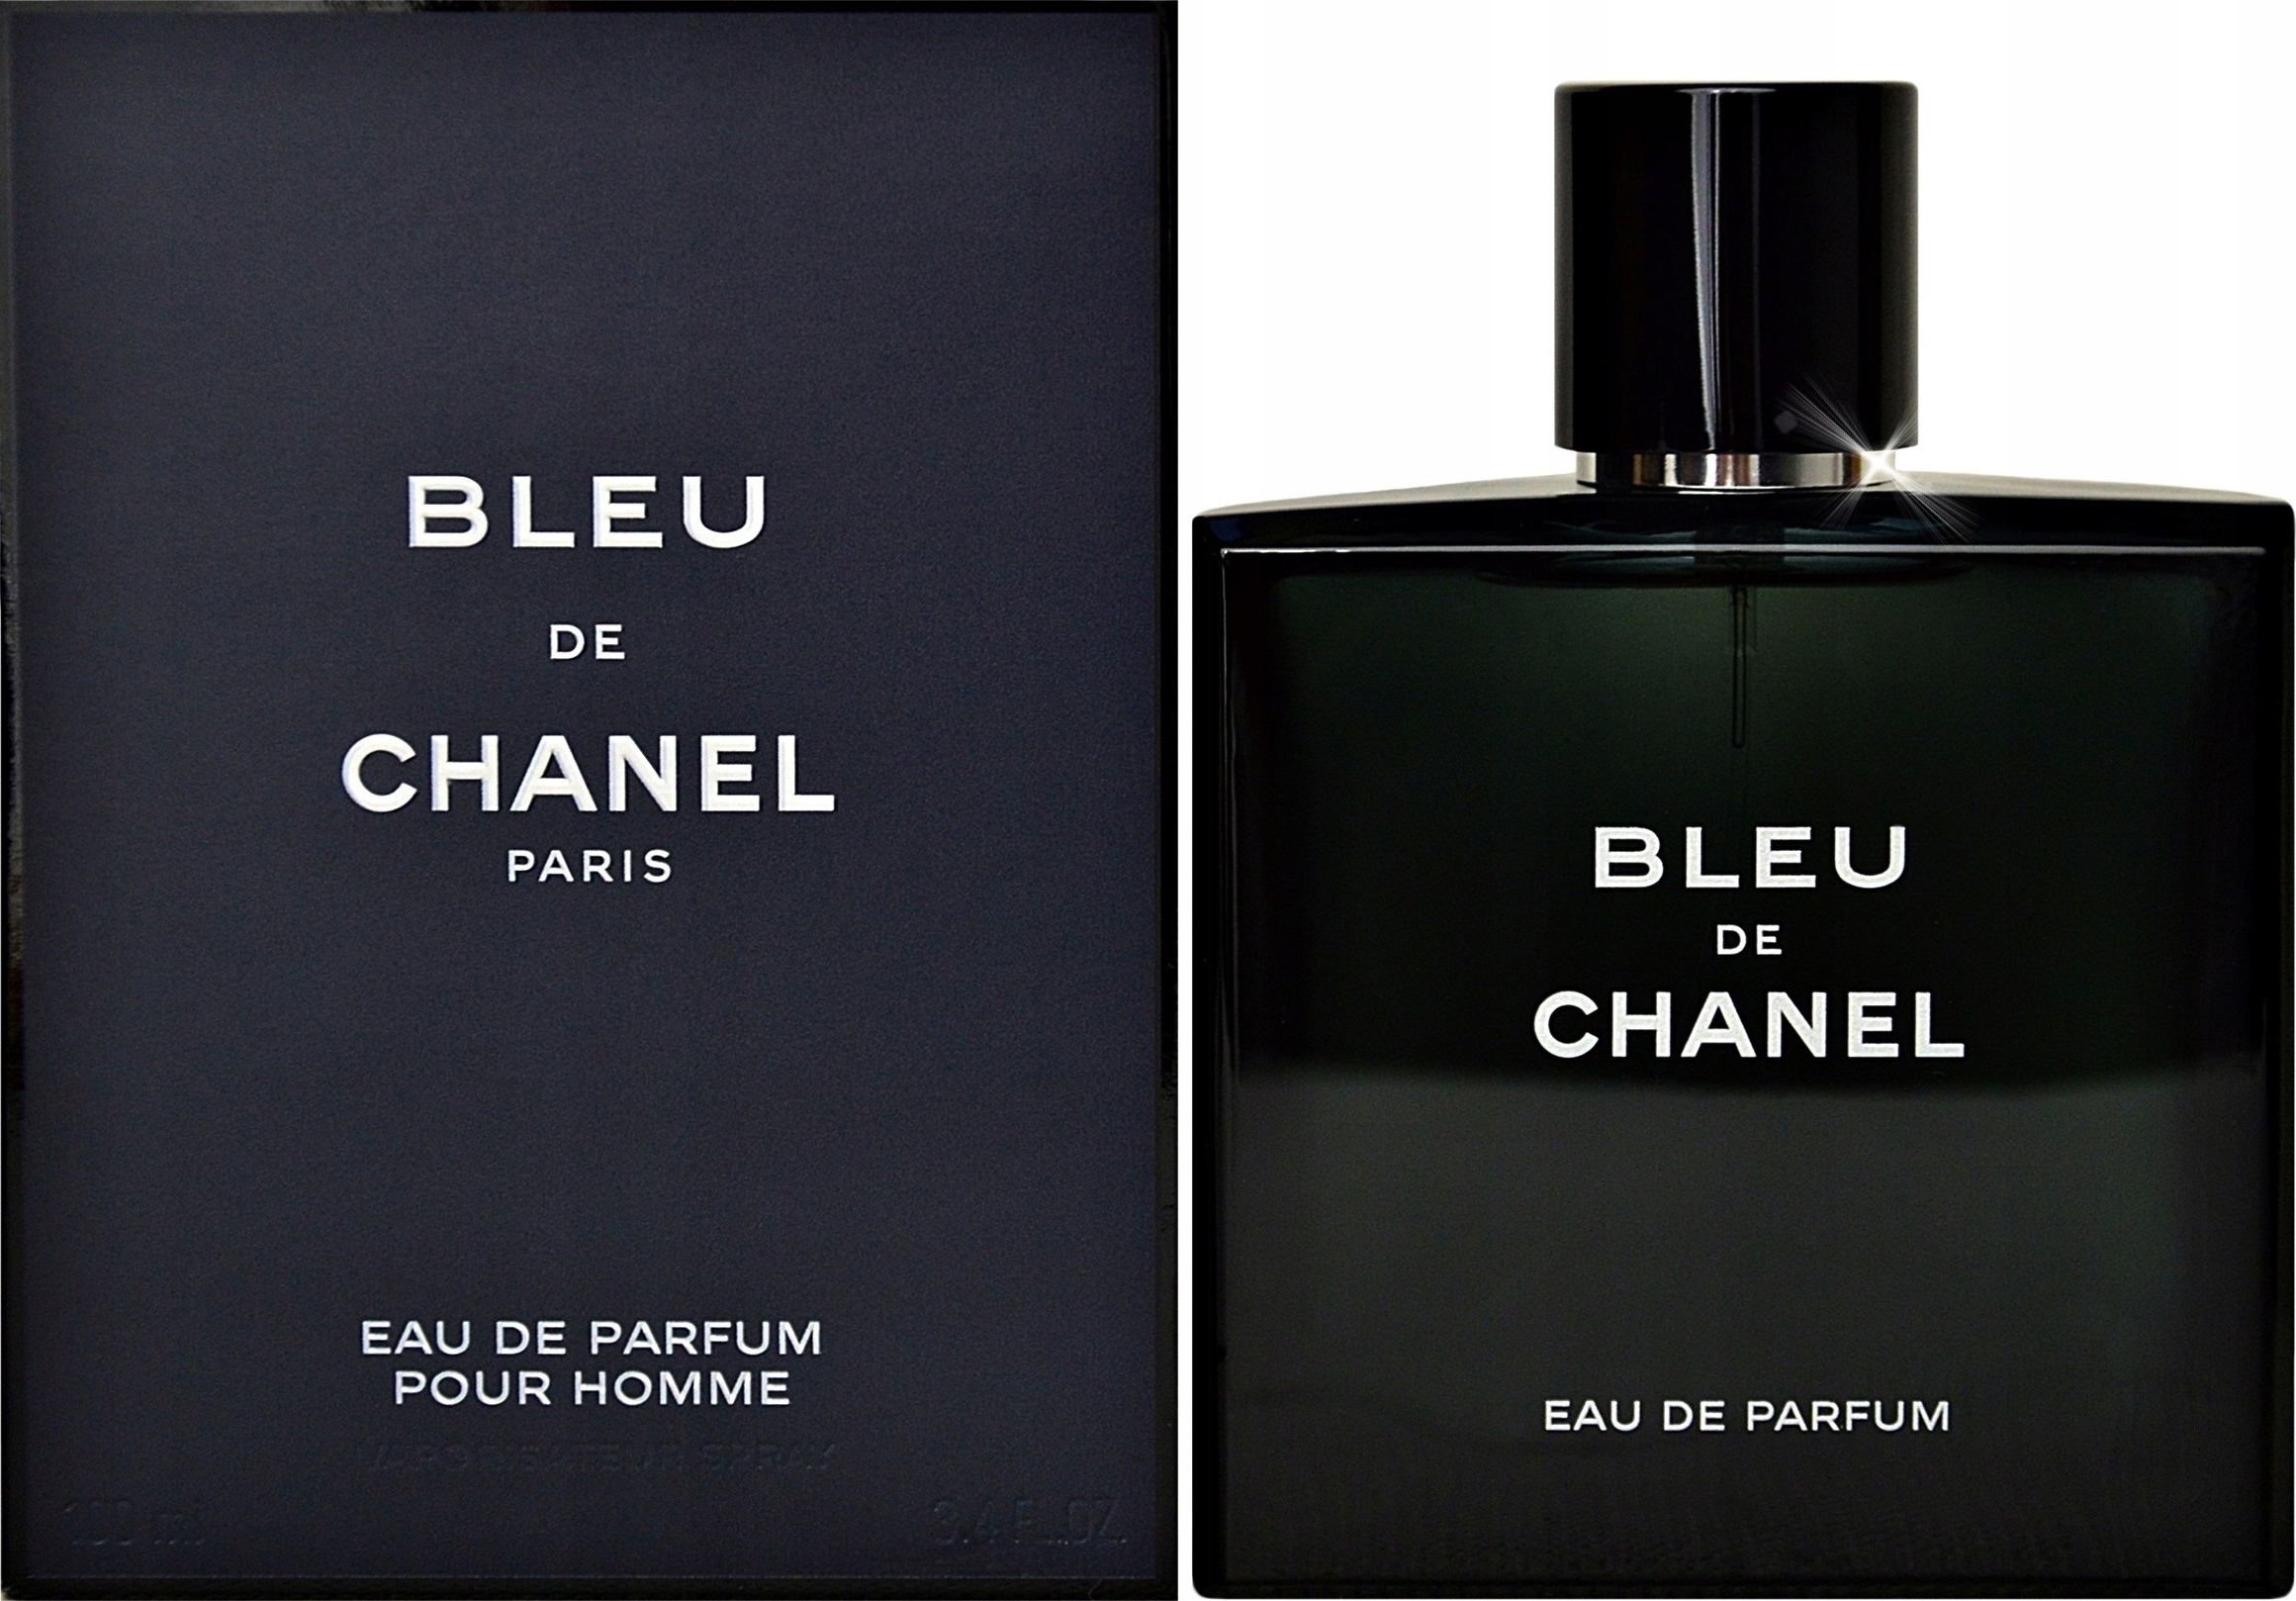 Bleu de chanel москва. Chanel bleu de Chanel Parfum 100 ml. Blue Chanel 100 ml. Chanel Blue de Chanel 100ml. Chanel bleu de Chanel 50 ml.